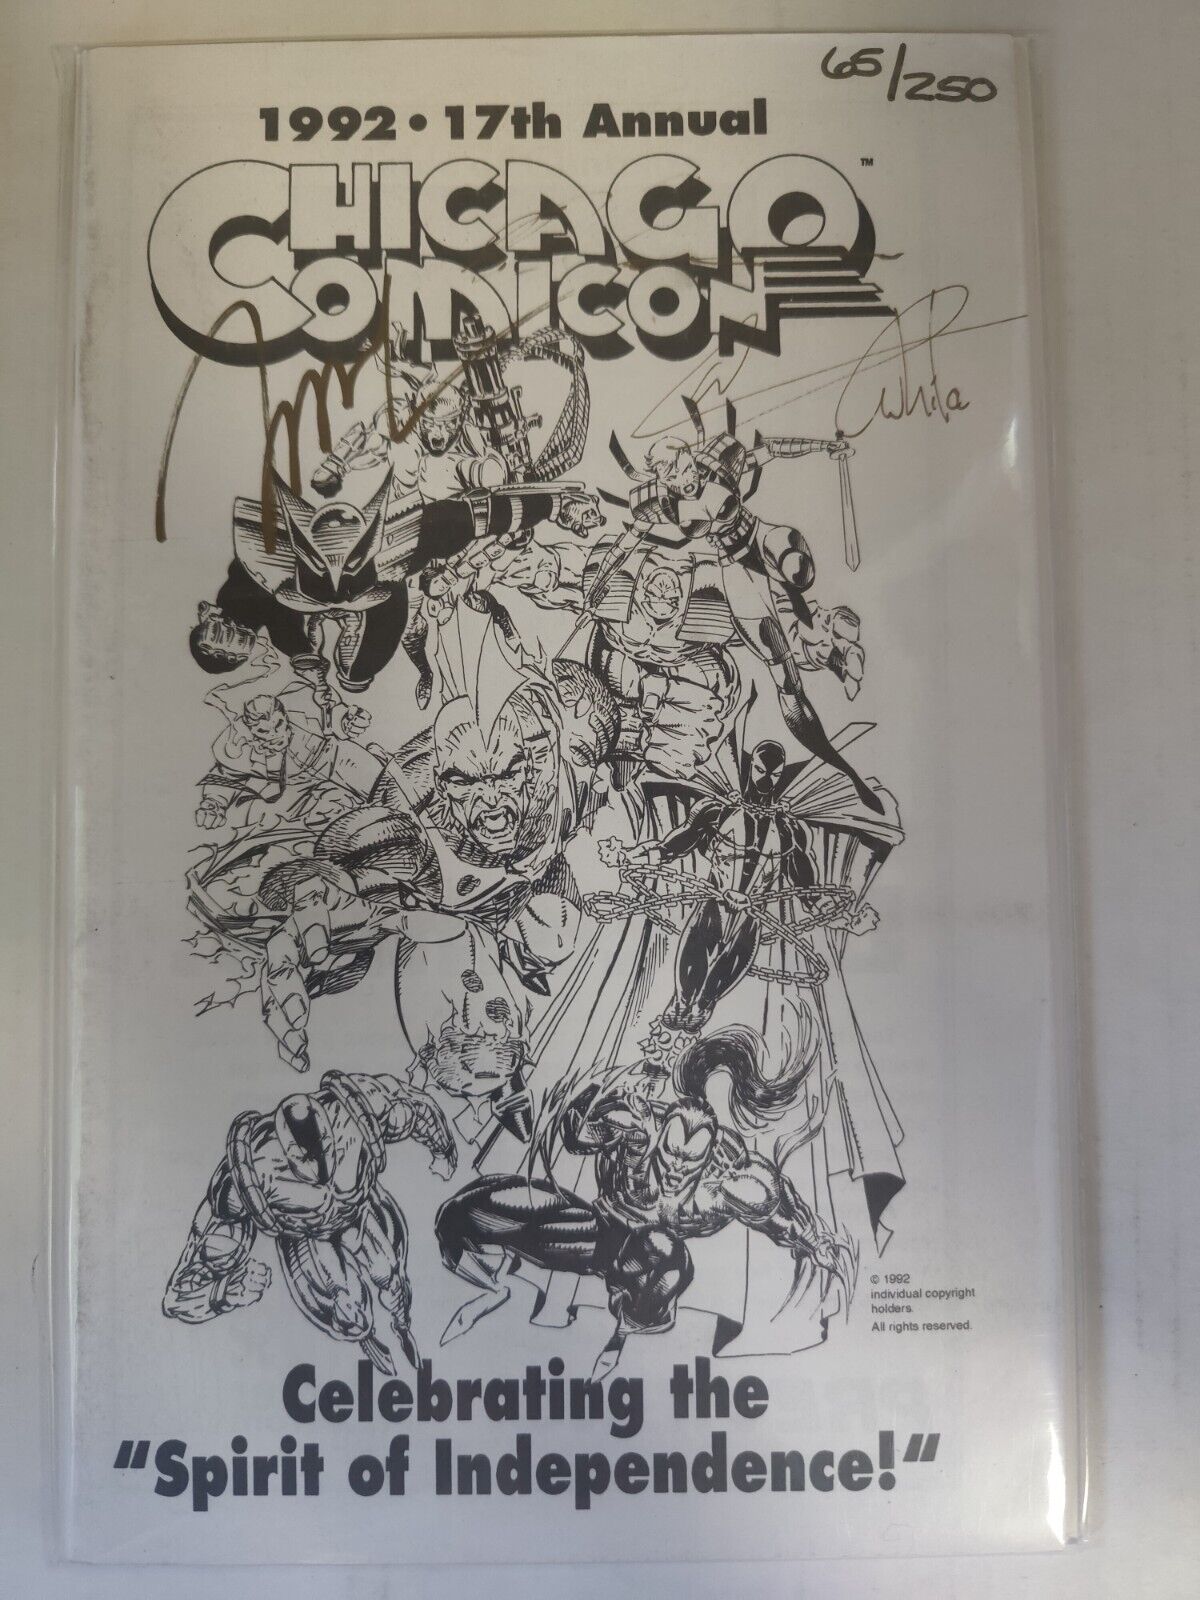 CHICAGO COMICON 1992 SOUVENIR PROGRAM BOOK - SIGNED - EARLY IMAGE COMICS - FN/VF